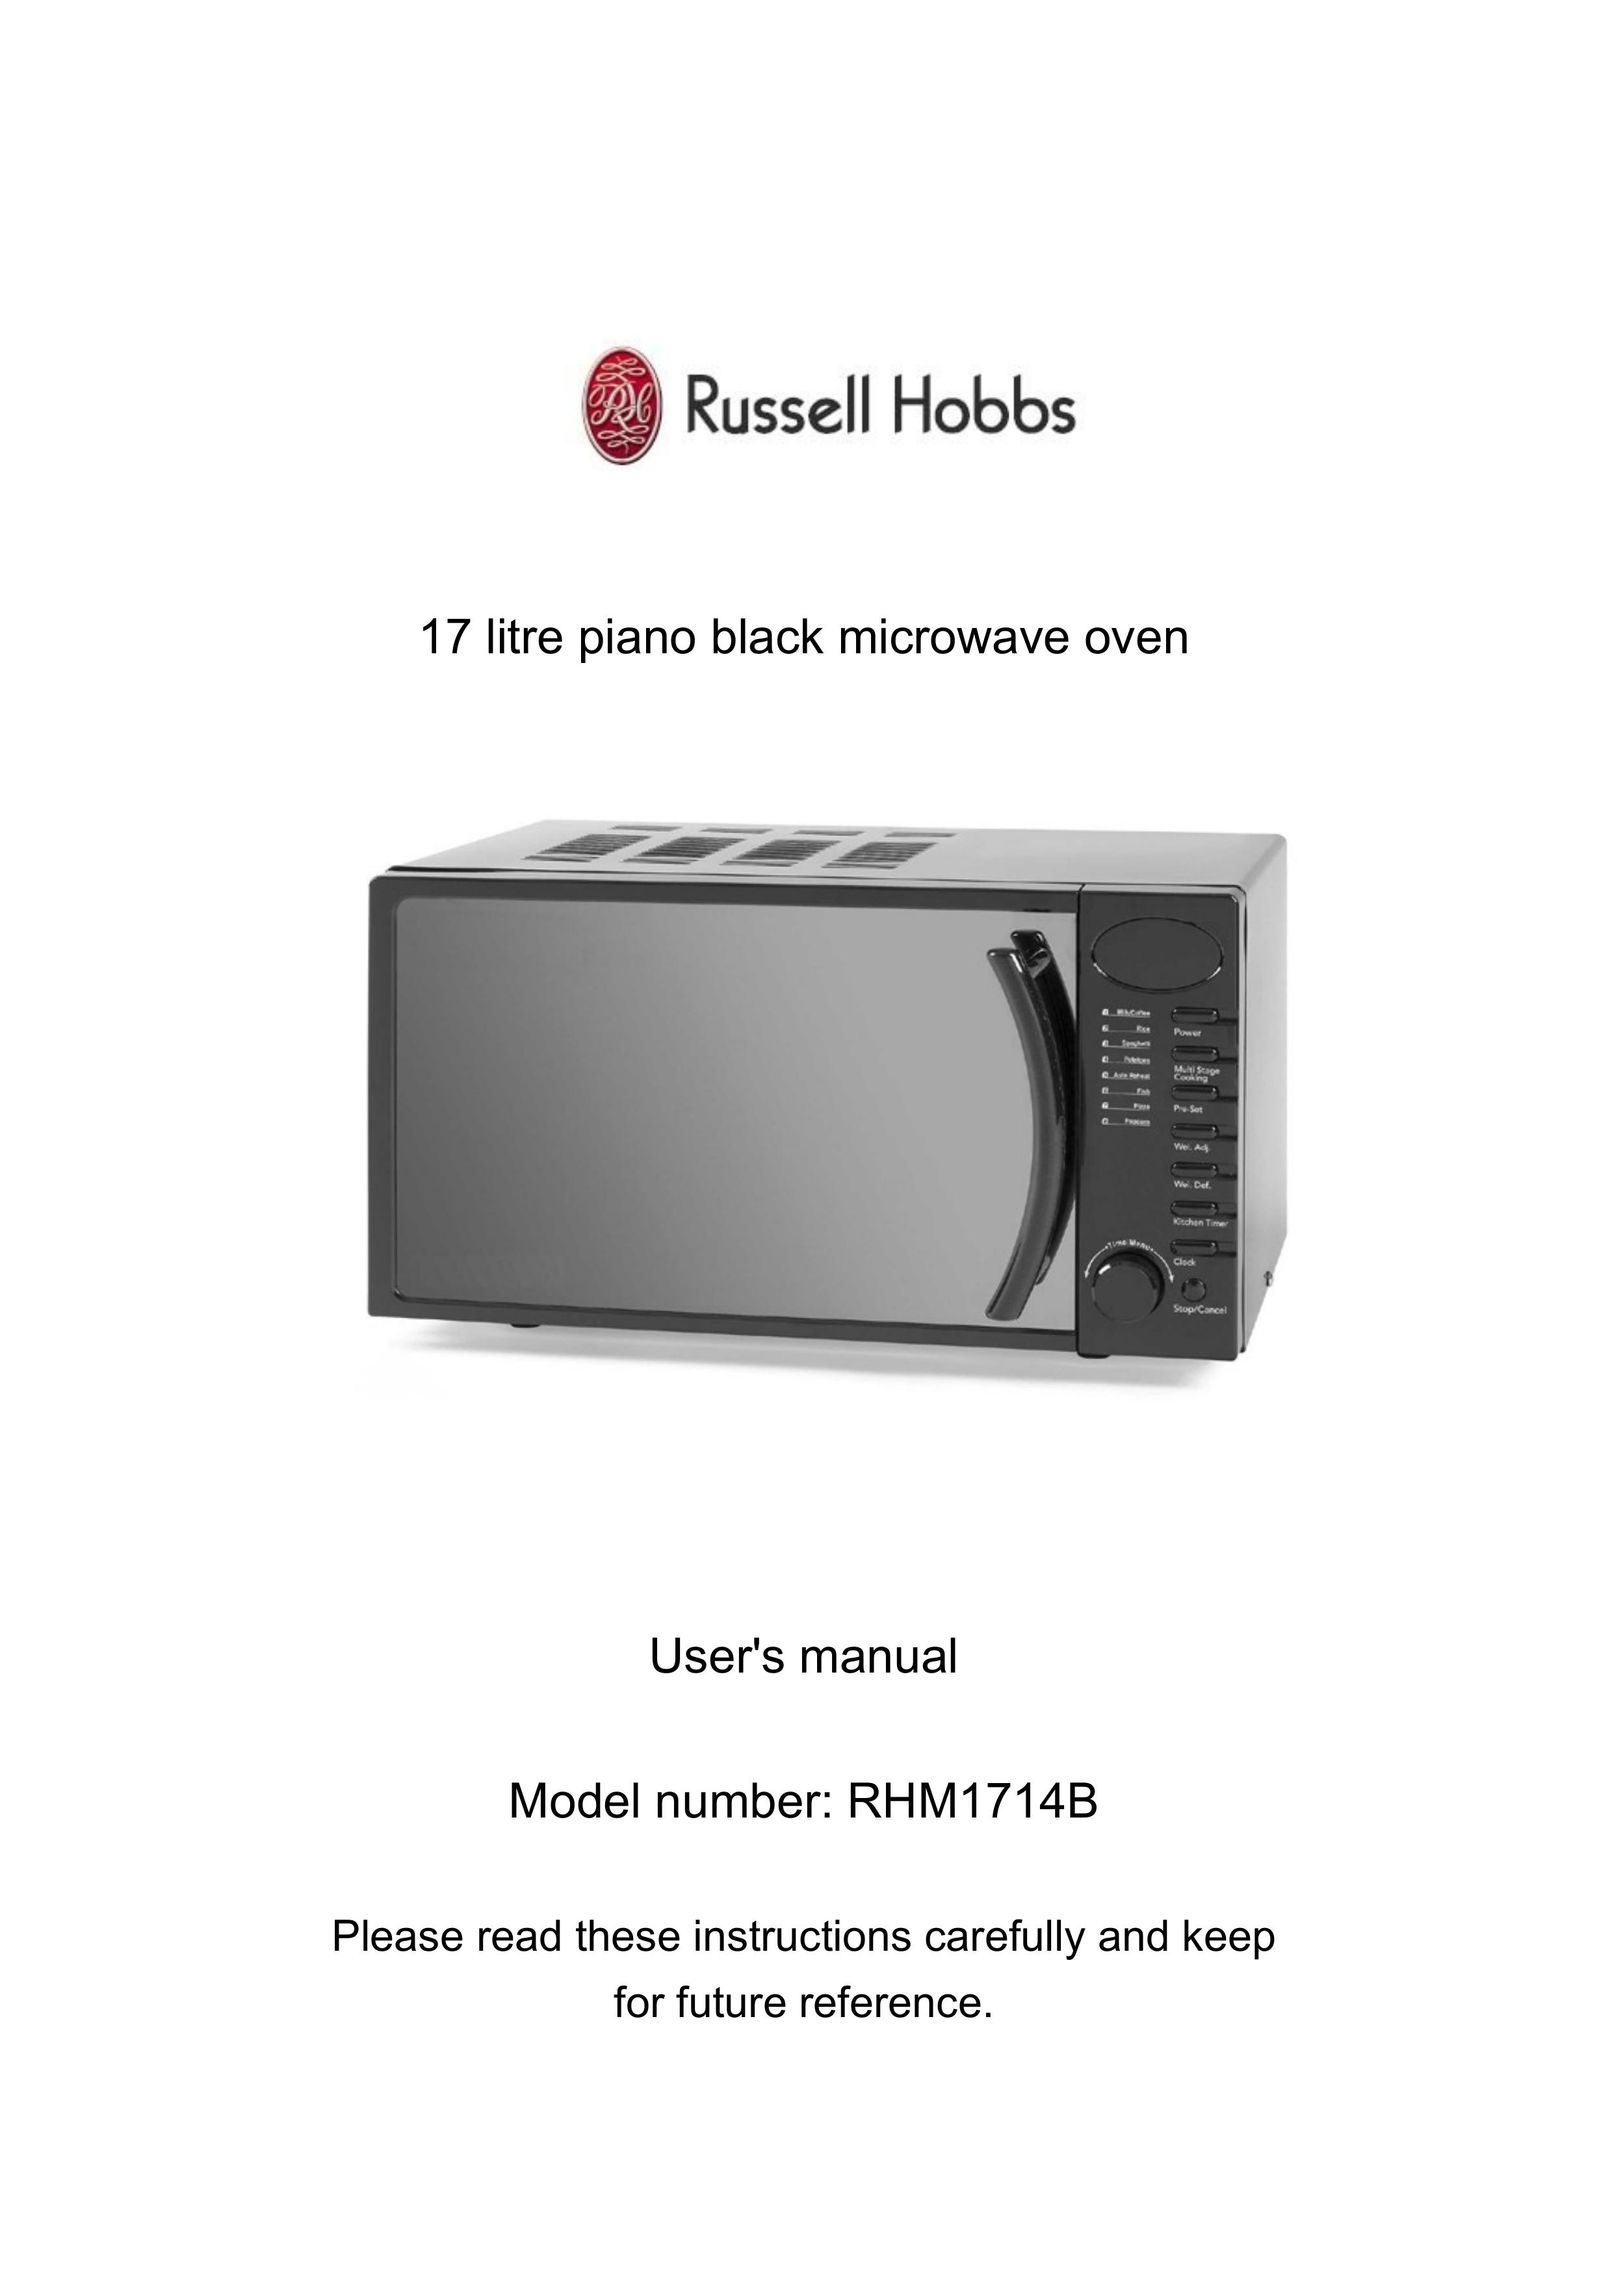 Russell Hobbs RHM1714B Microwave Oven User Manual